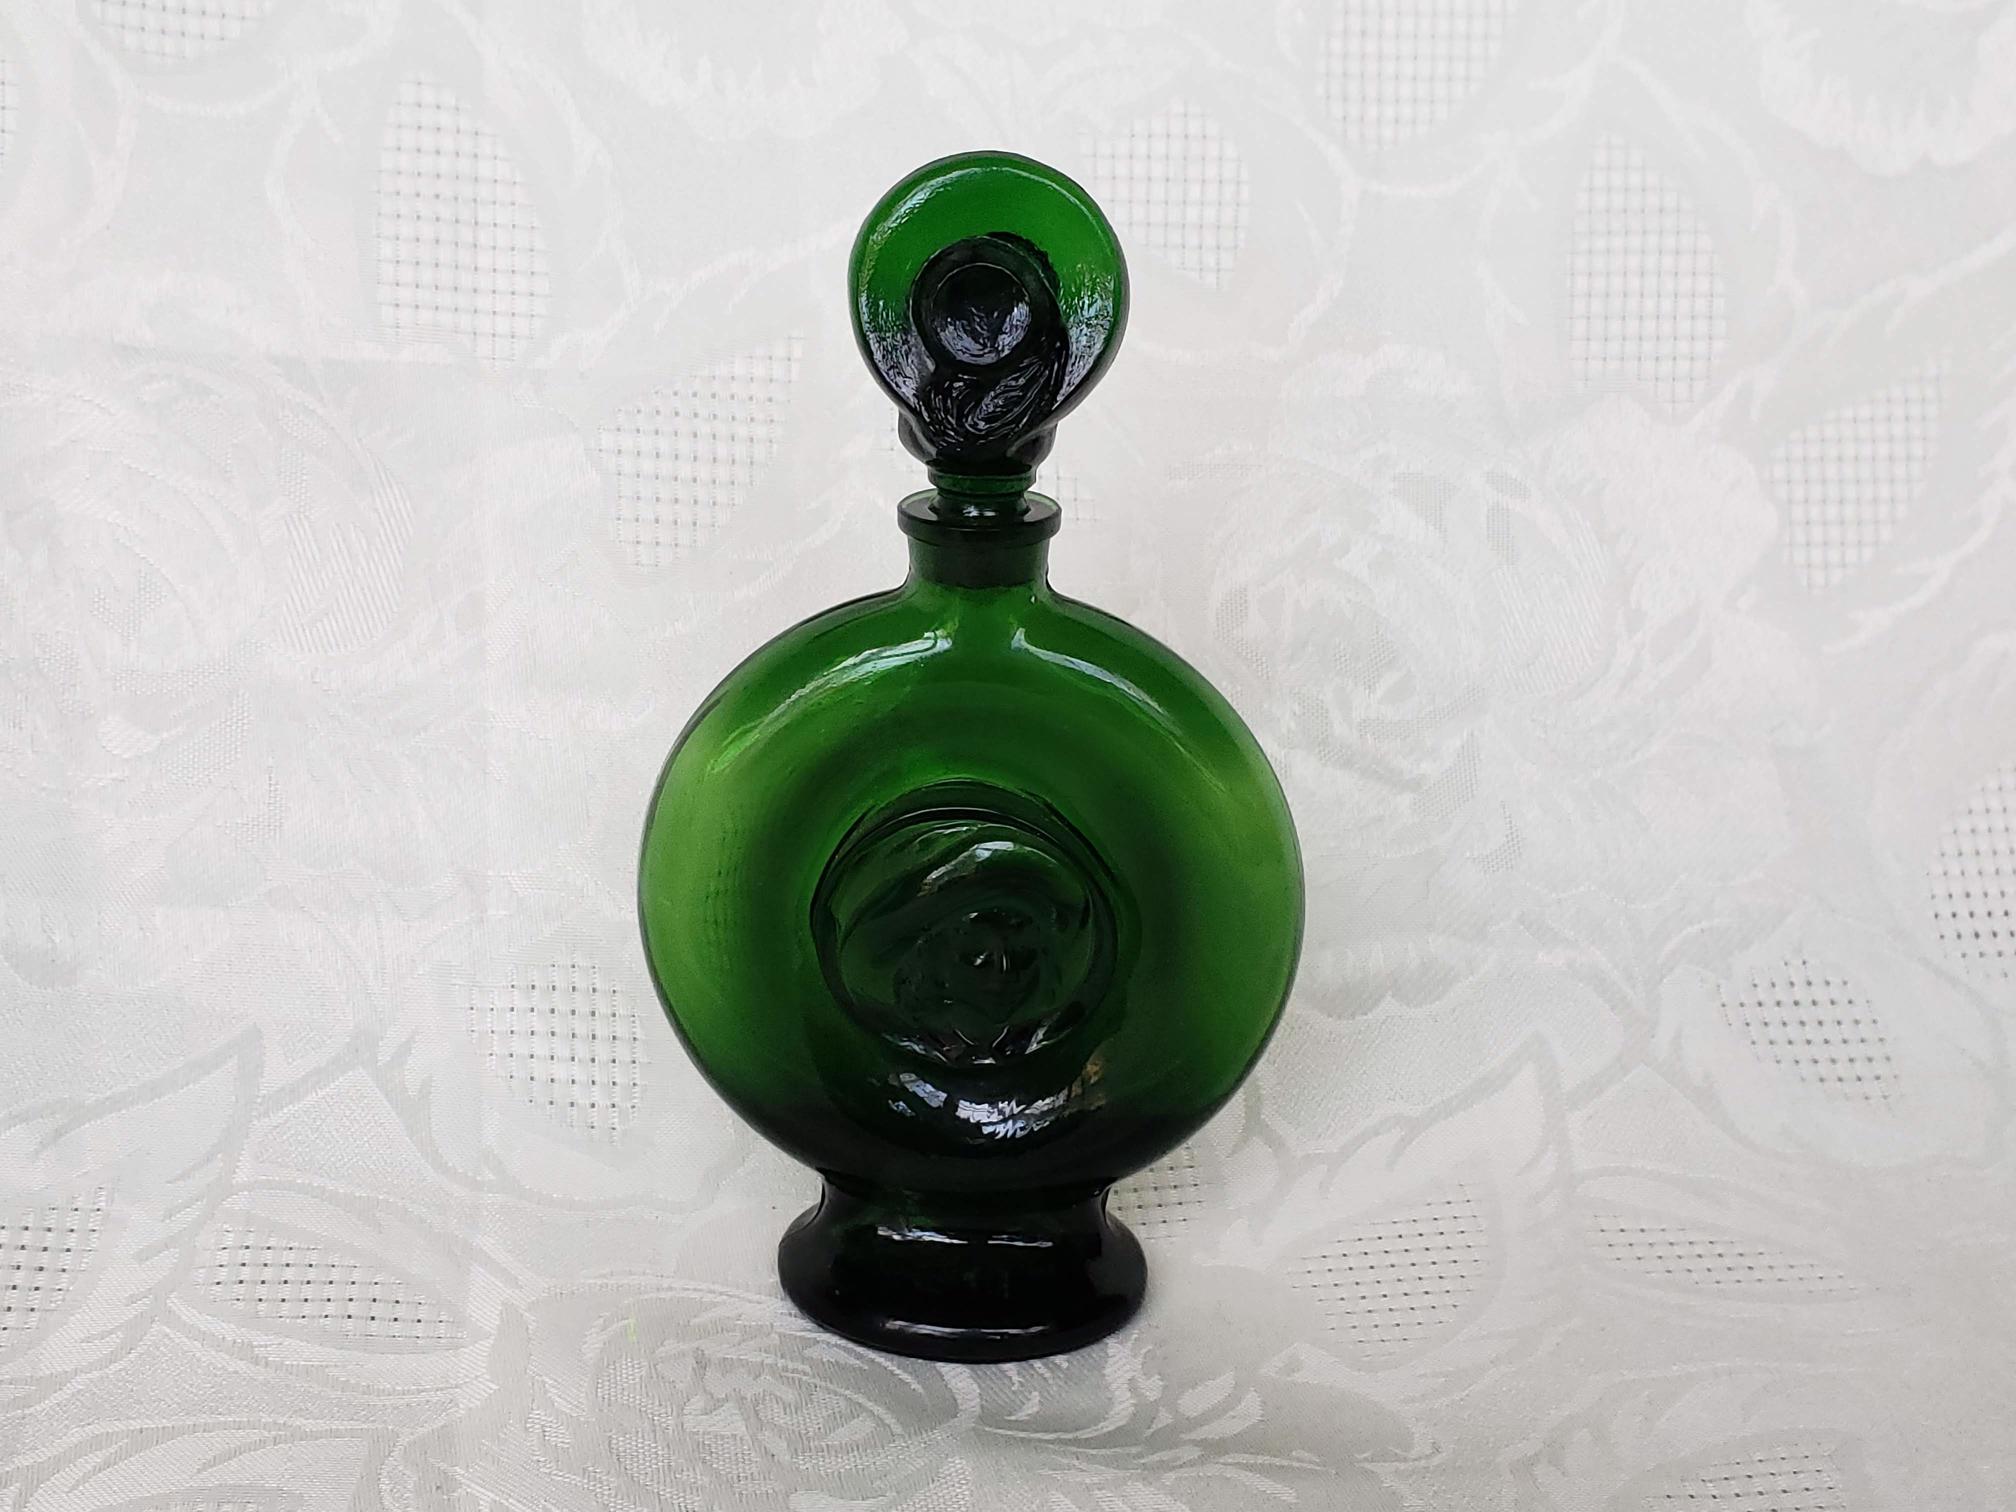 Vintage Glass Perfume Bottles